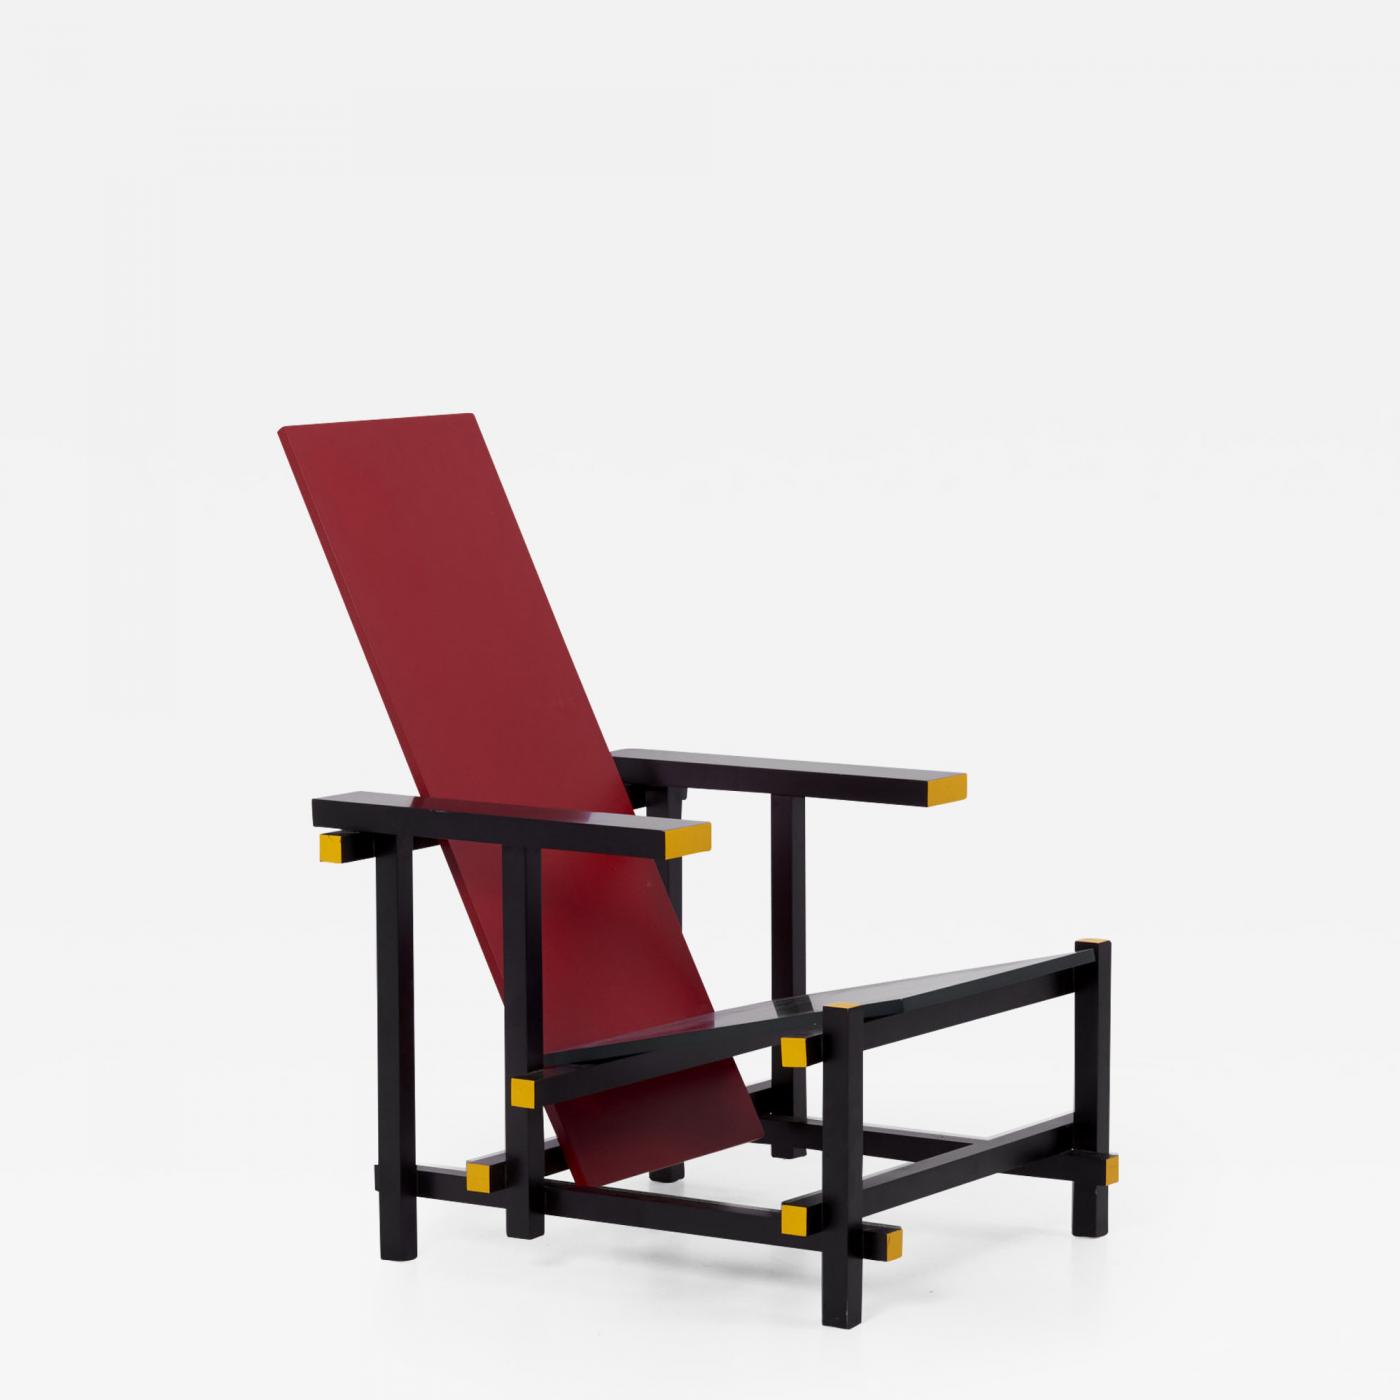 Vervloekt analoog Ramkoers Gerrit Rietveld - Red and Blue Chair by Gerrit T. Rietveld for Cassina